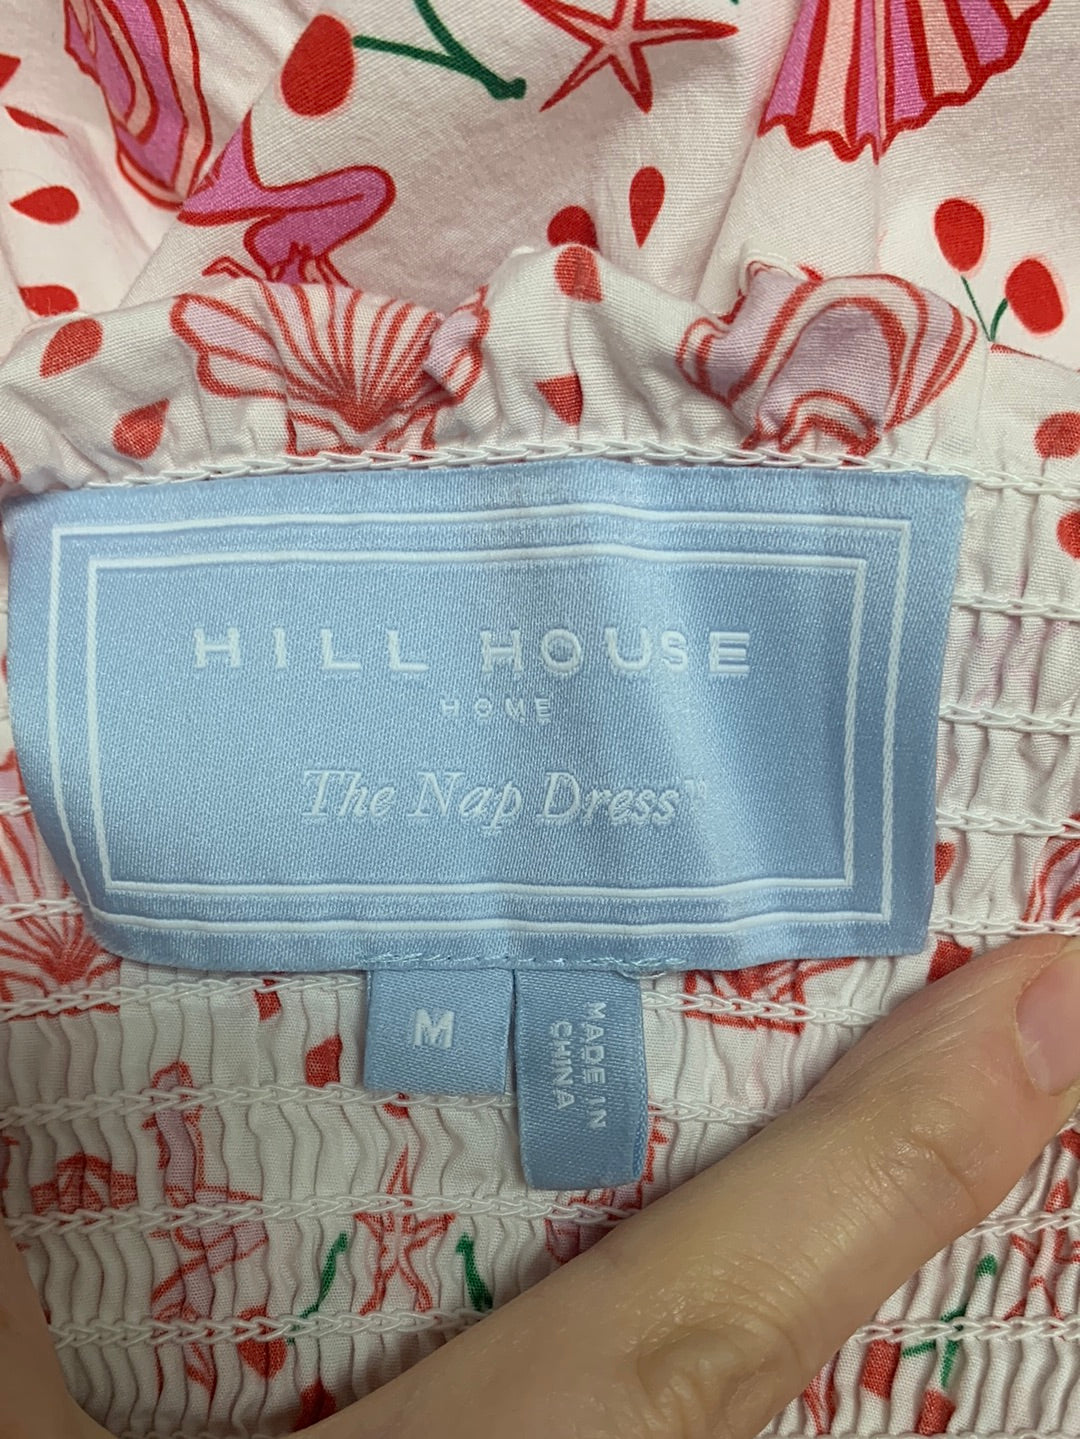 HILL HOUSE pink print Mermaid Cherry Midi Ellie Nap Dress - Medium (repairs needed)